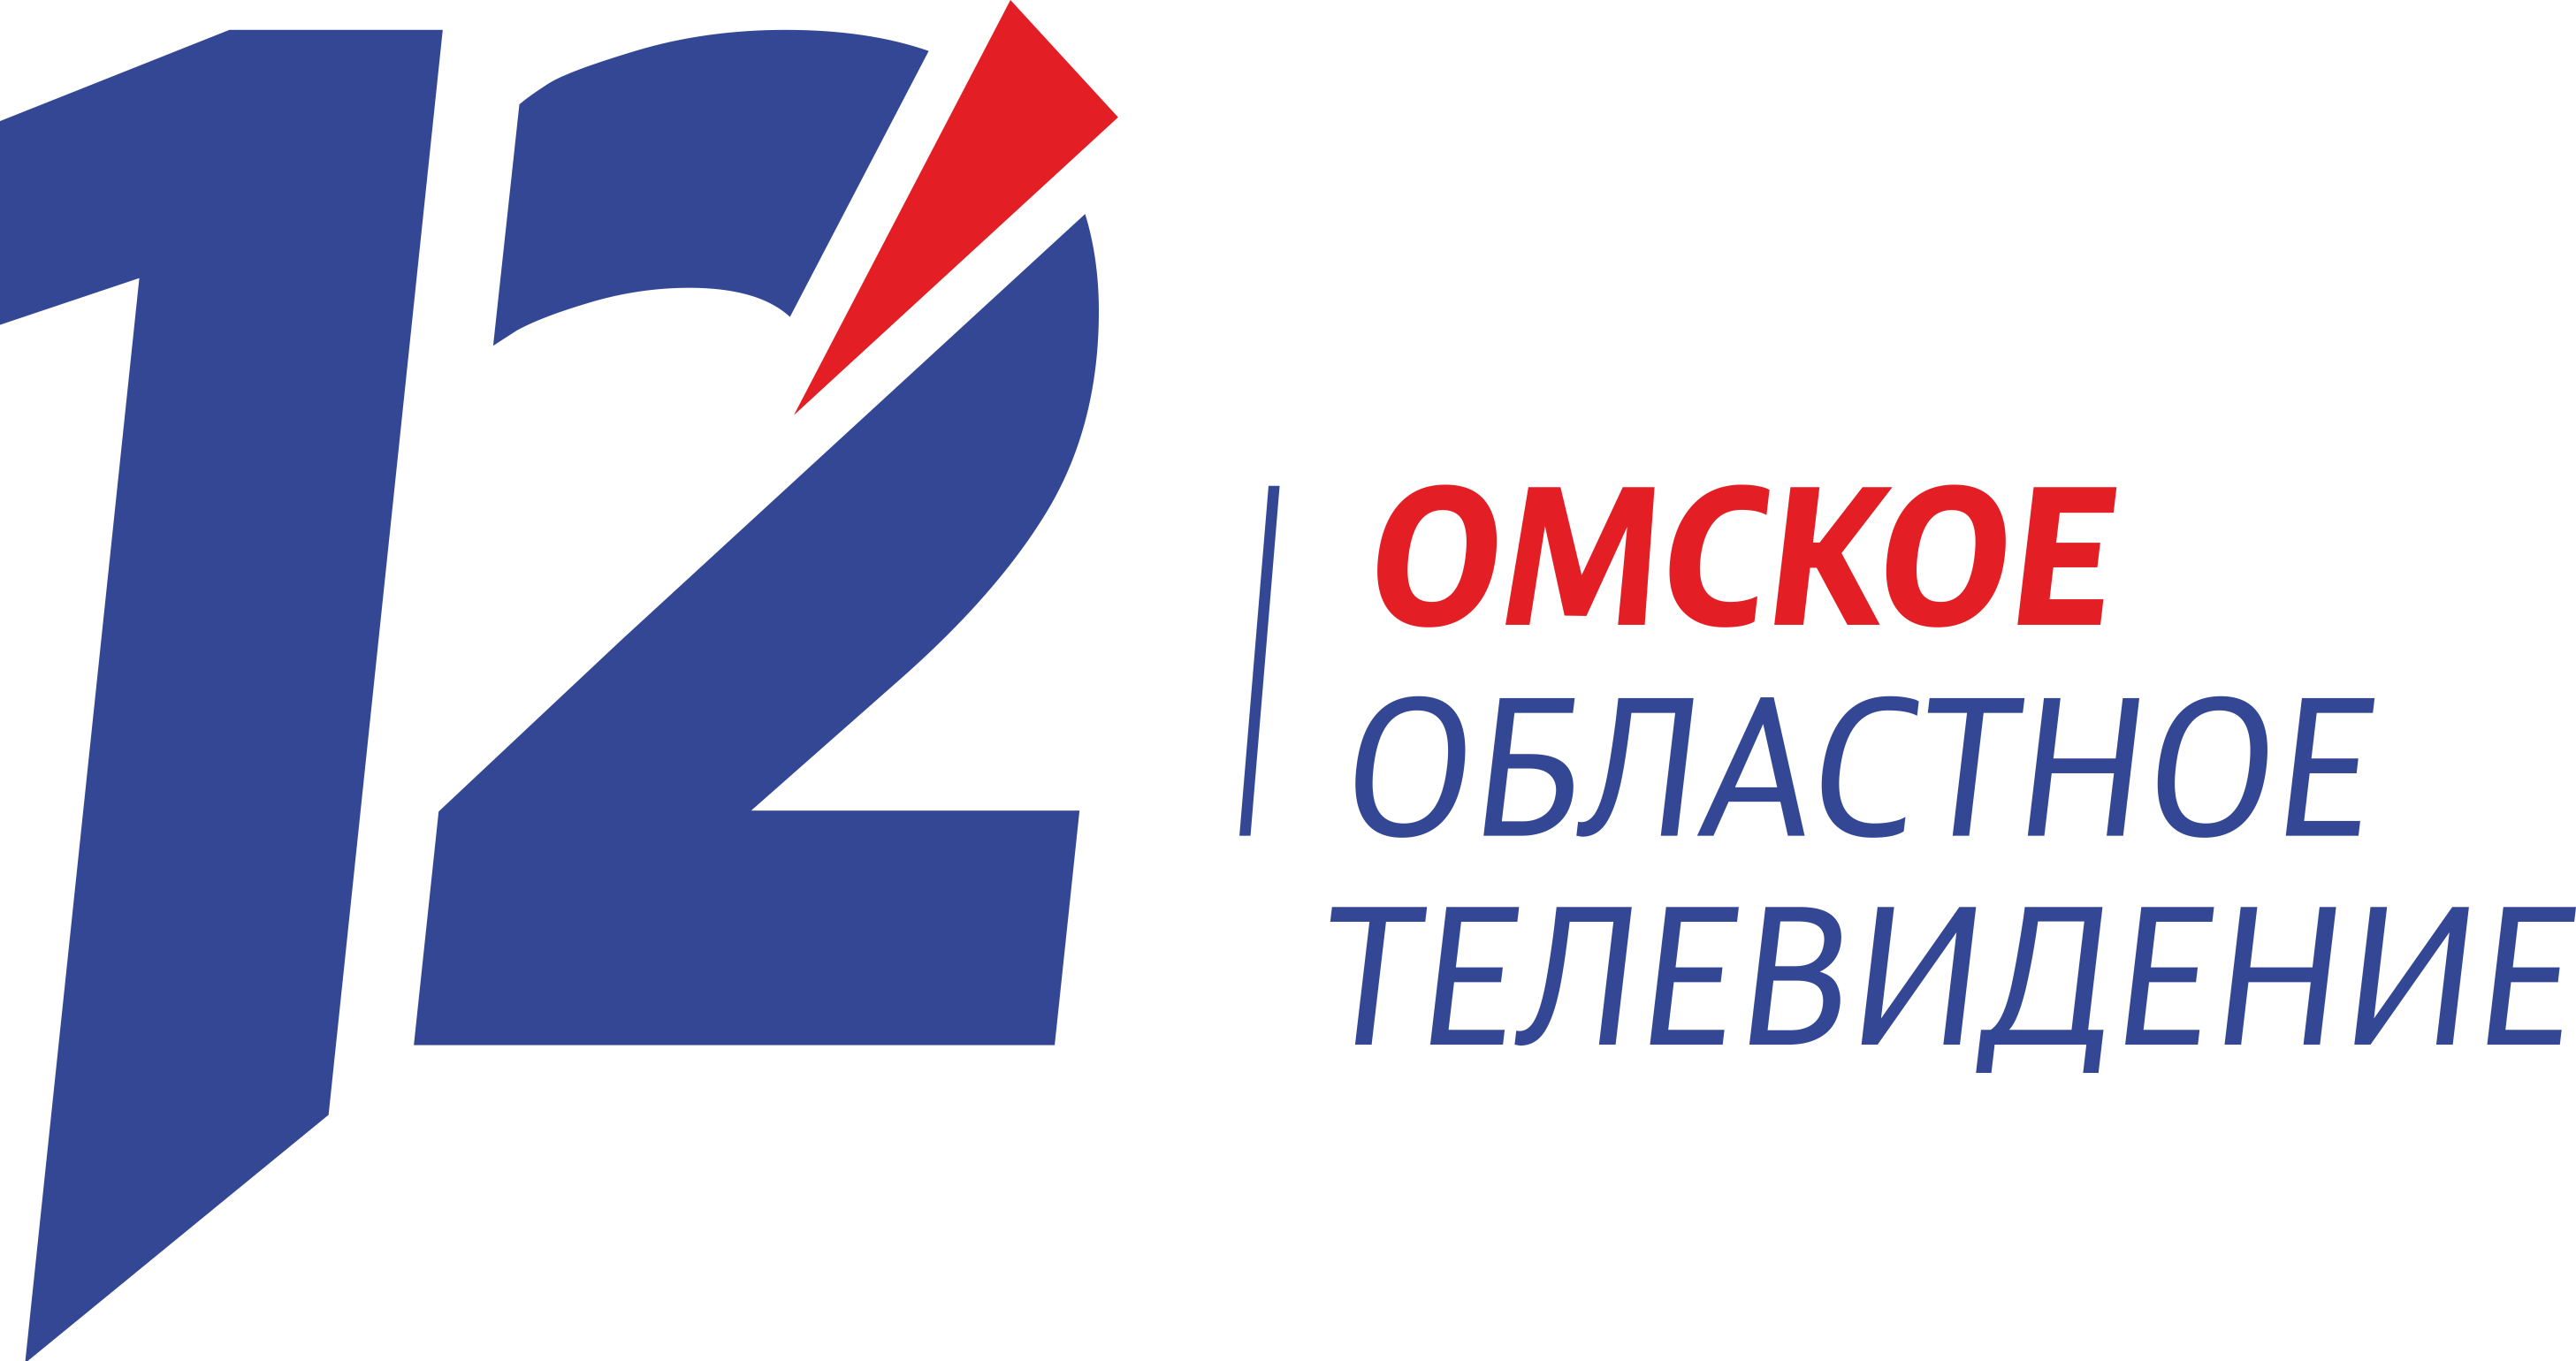 12 канал выборы. 12 Канал логотип. Омское областное Телевидение. 12 Канал Омск. 12 Канал Омск логотип.